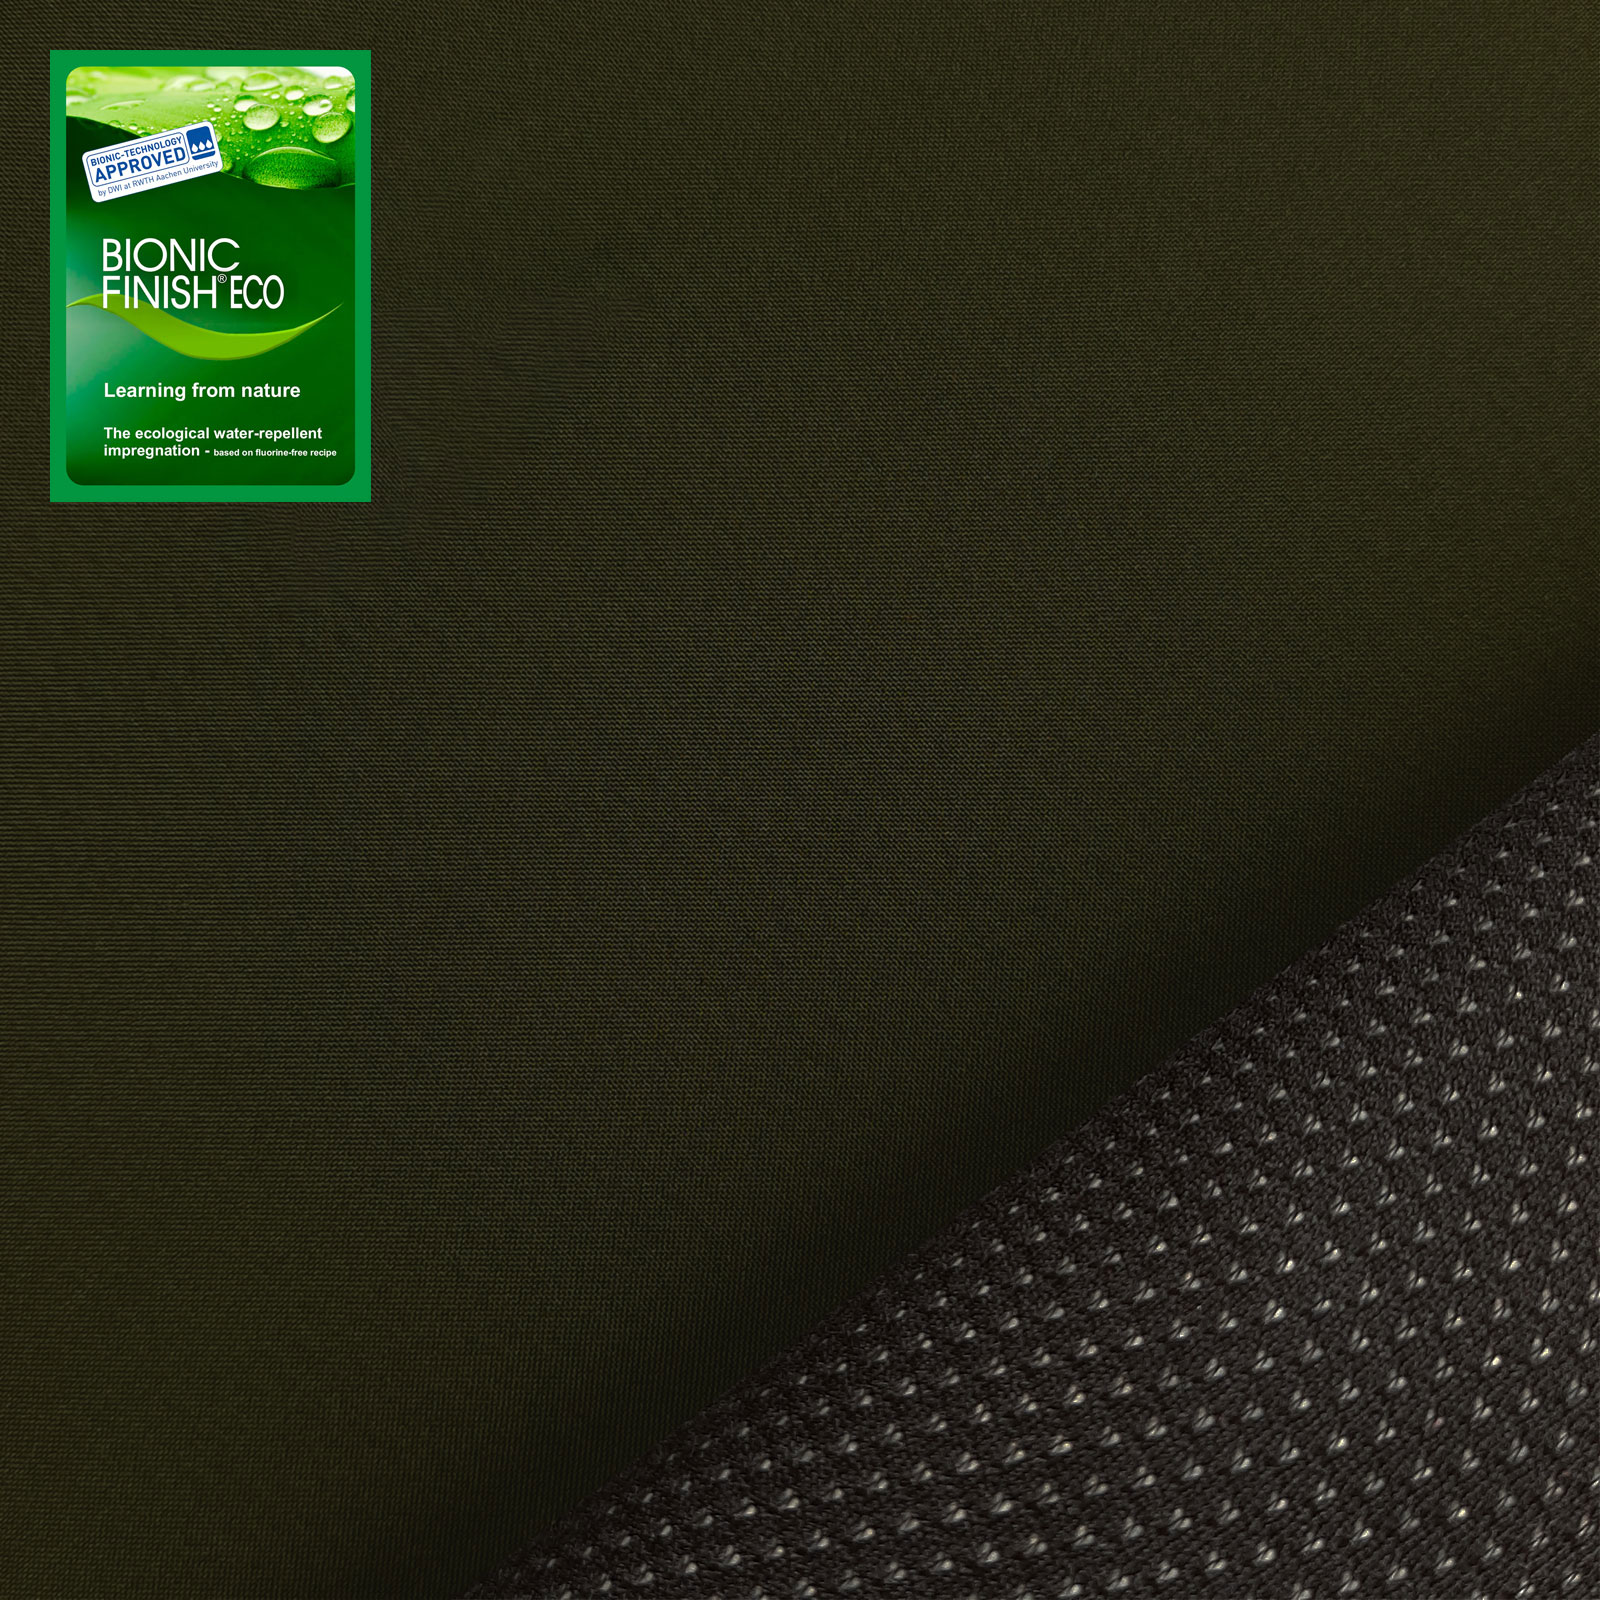 Athletik – Softshell ligero con membrana - abeto verde oliva oscuro